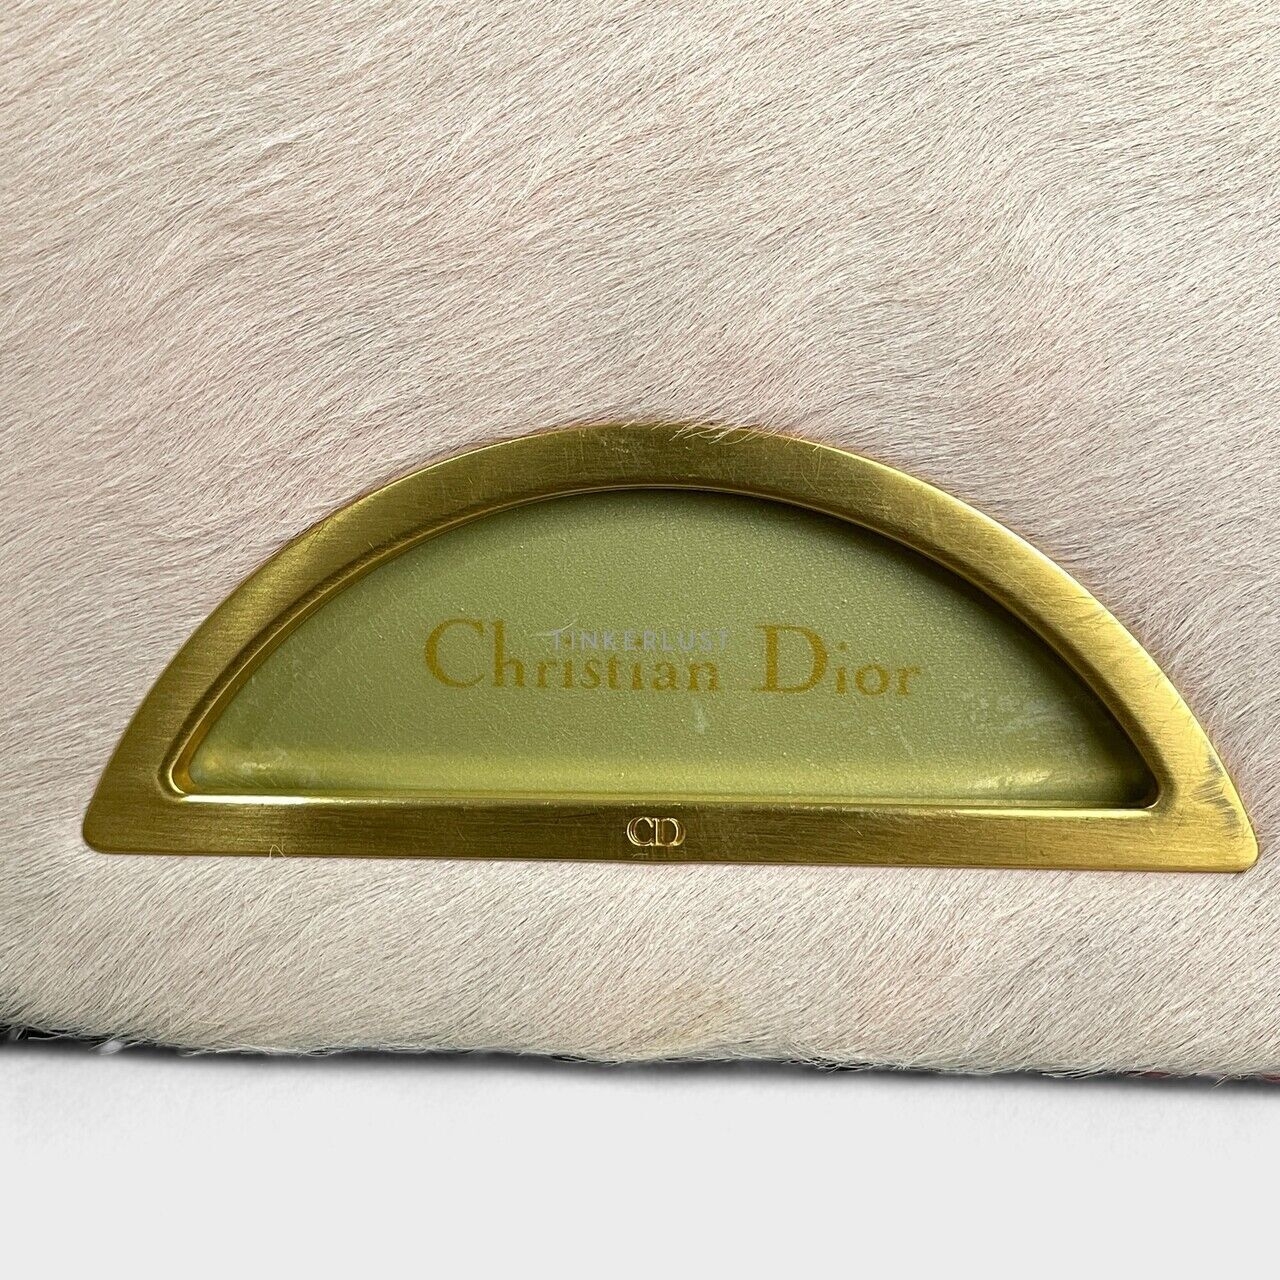 Christian Dior Malice Pearl Pink Green Fur Patent Leather Shoulder Bag